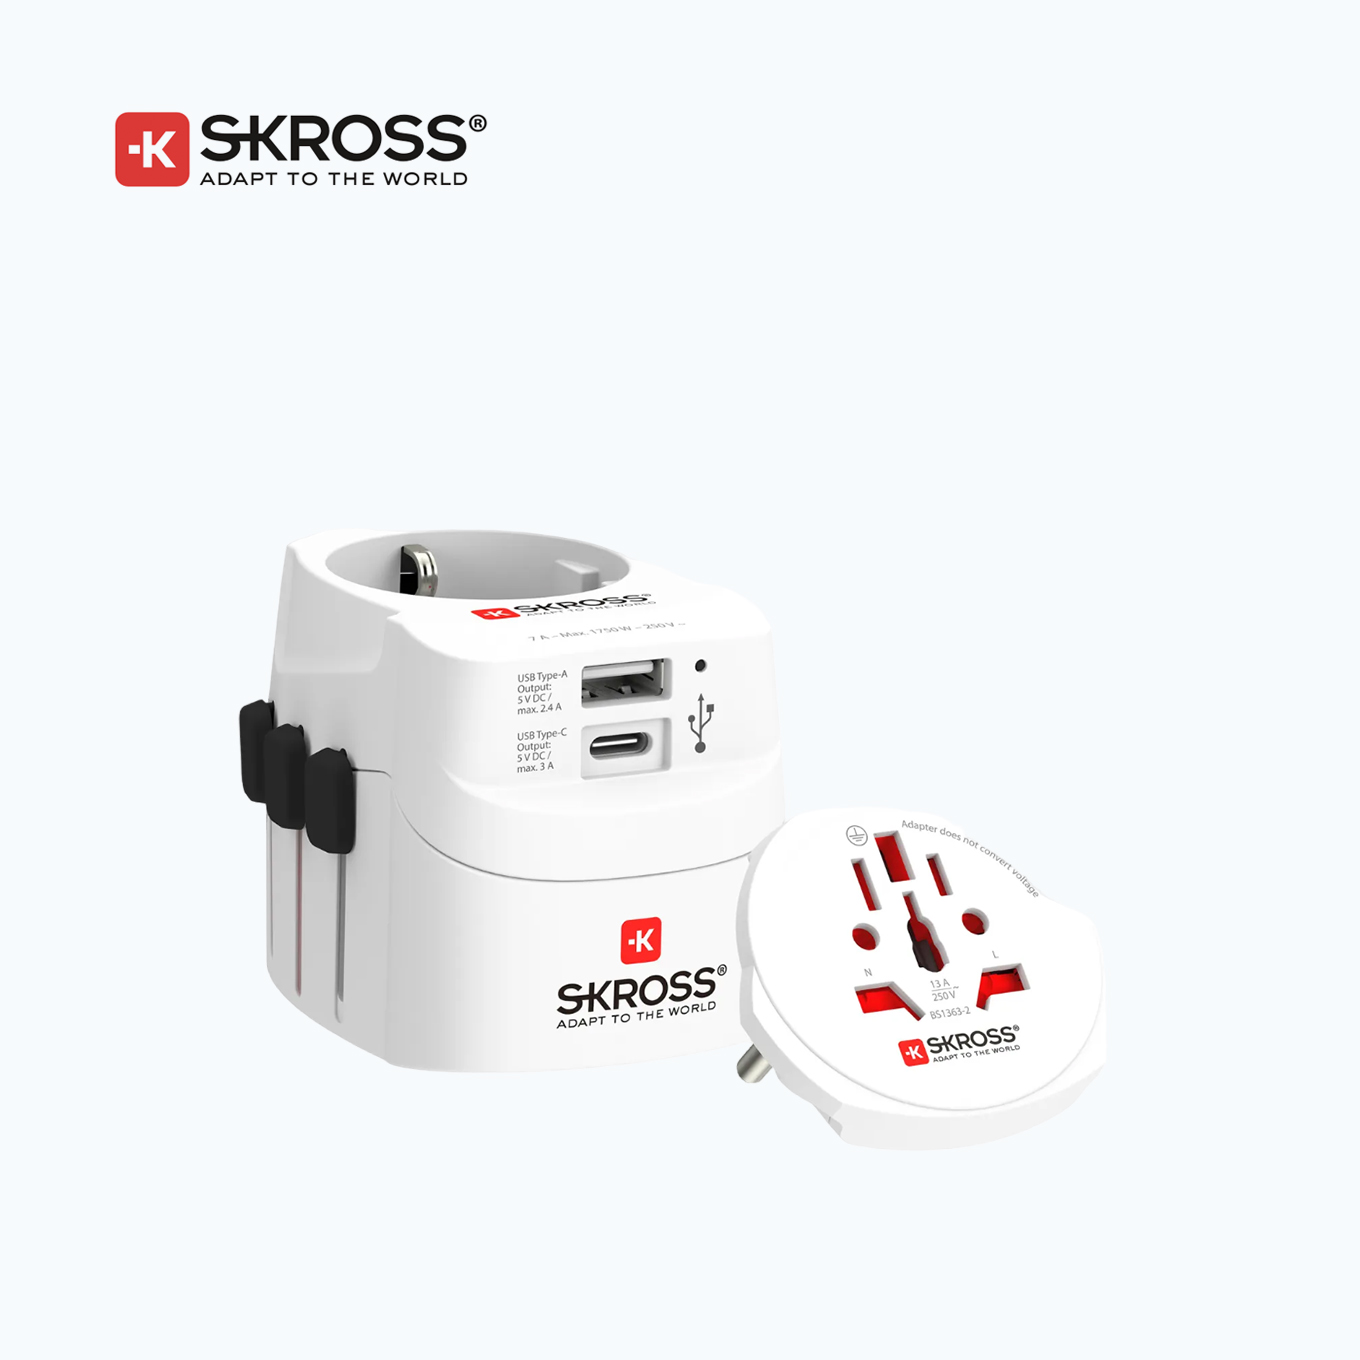 Skross PRO Light USB (AC)-World, 3 Slides Universal Travel Adapter with EU Adapter